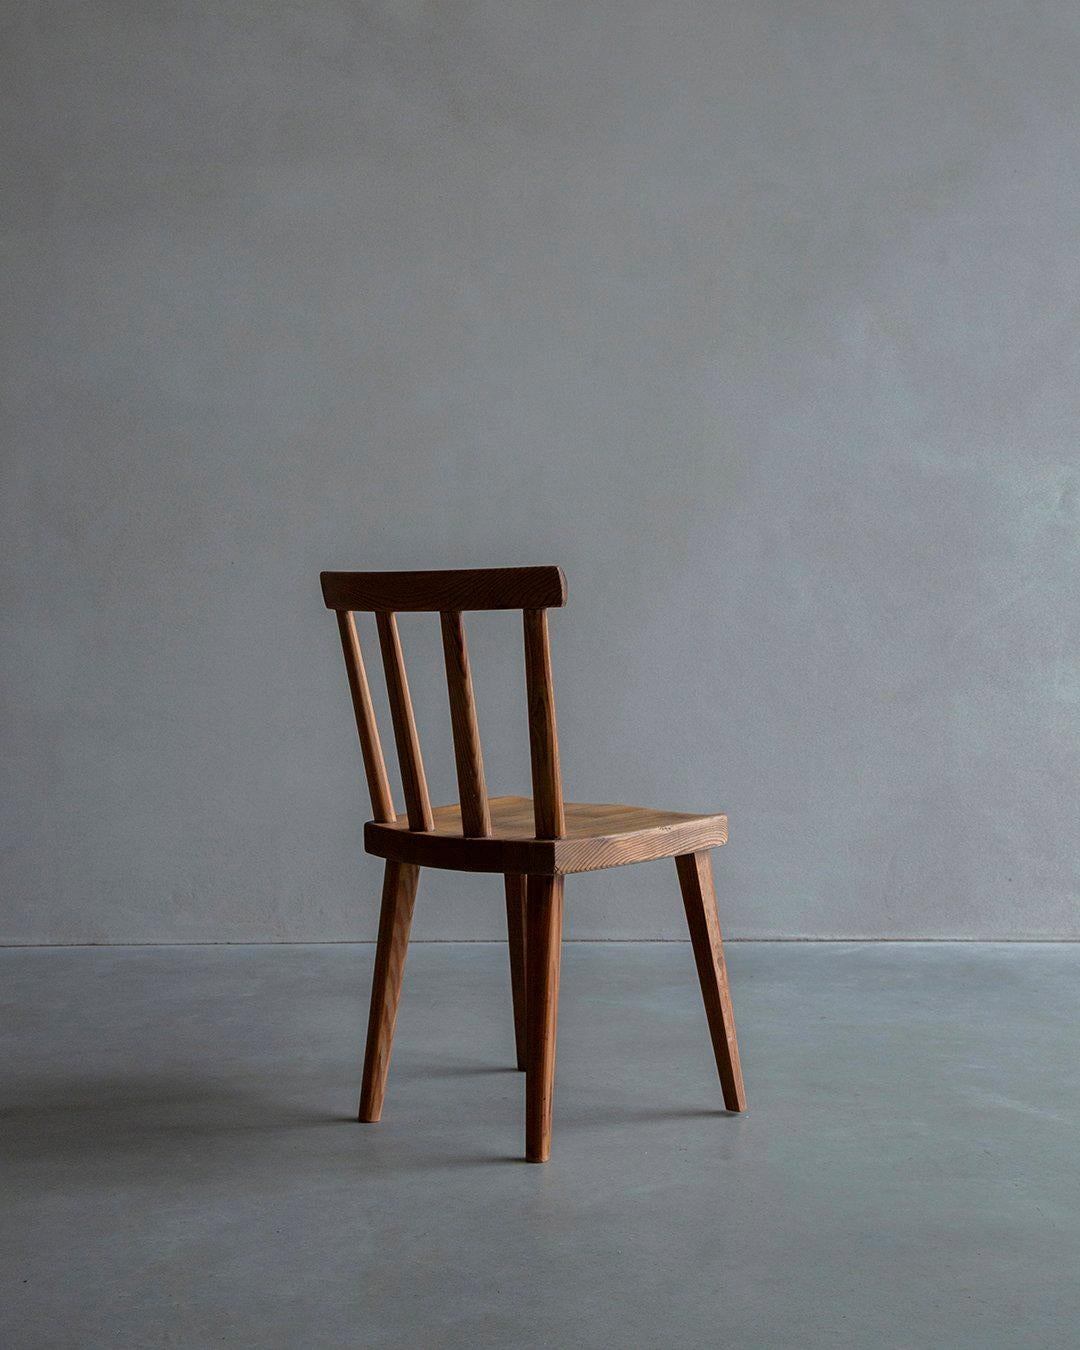 Swedish Axel Einar Hjorth - Utö Dining Chair - produced by Nordiska Kompaniet in Sweden For Sale